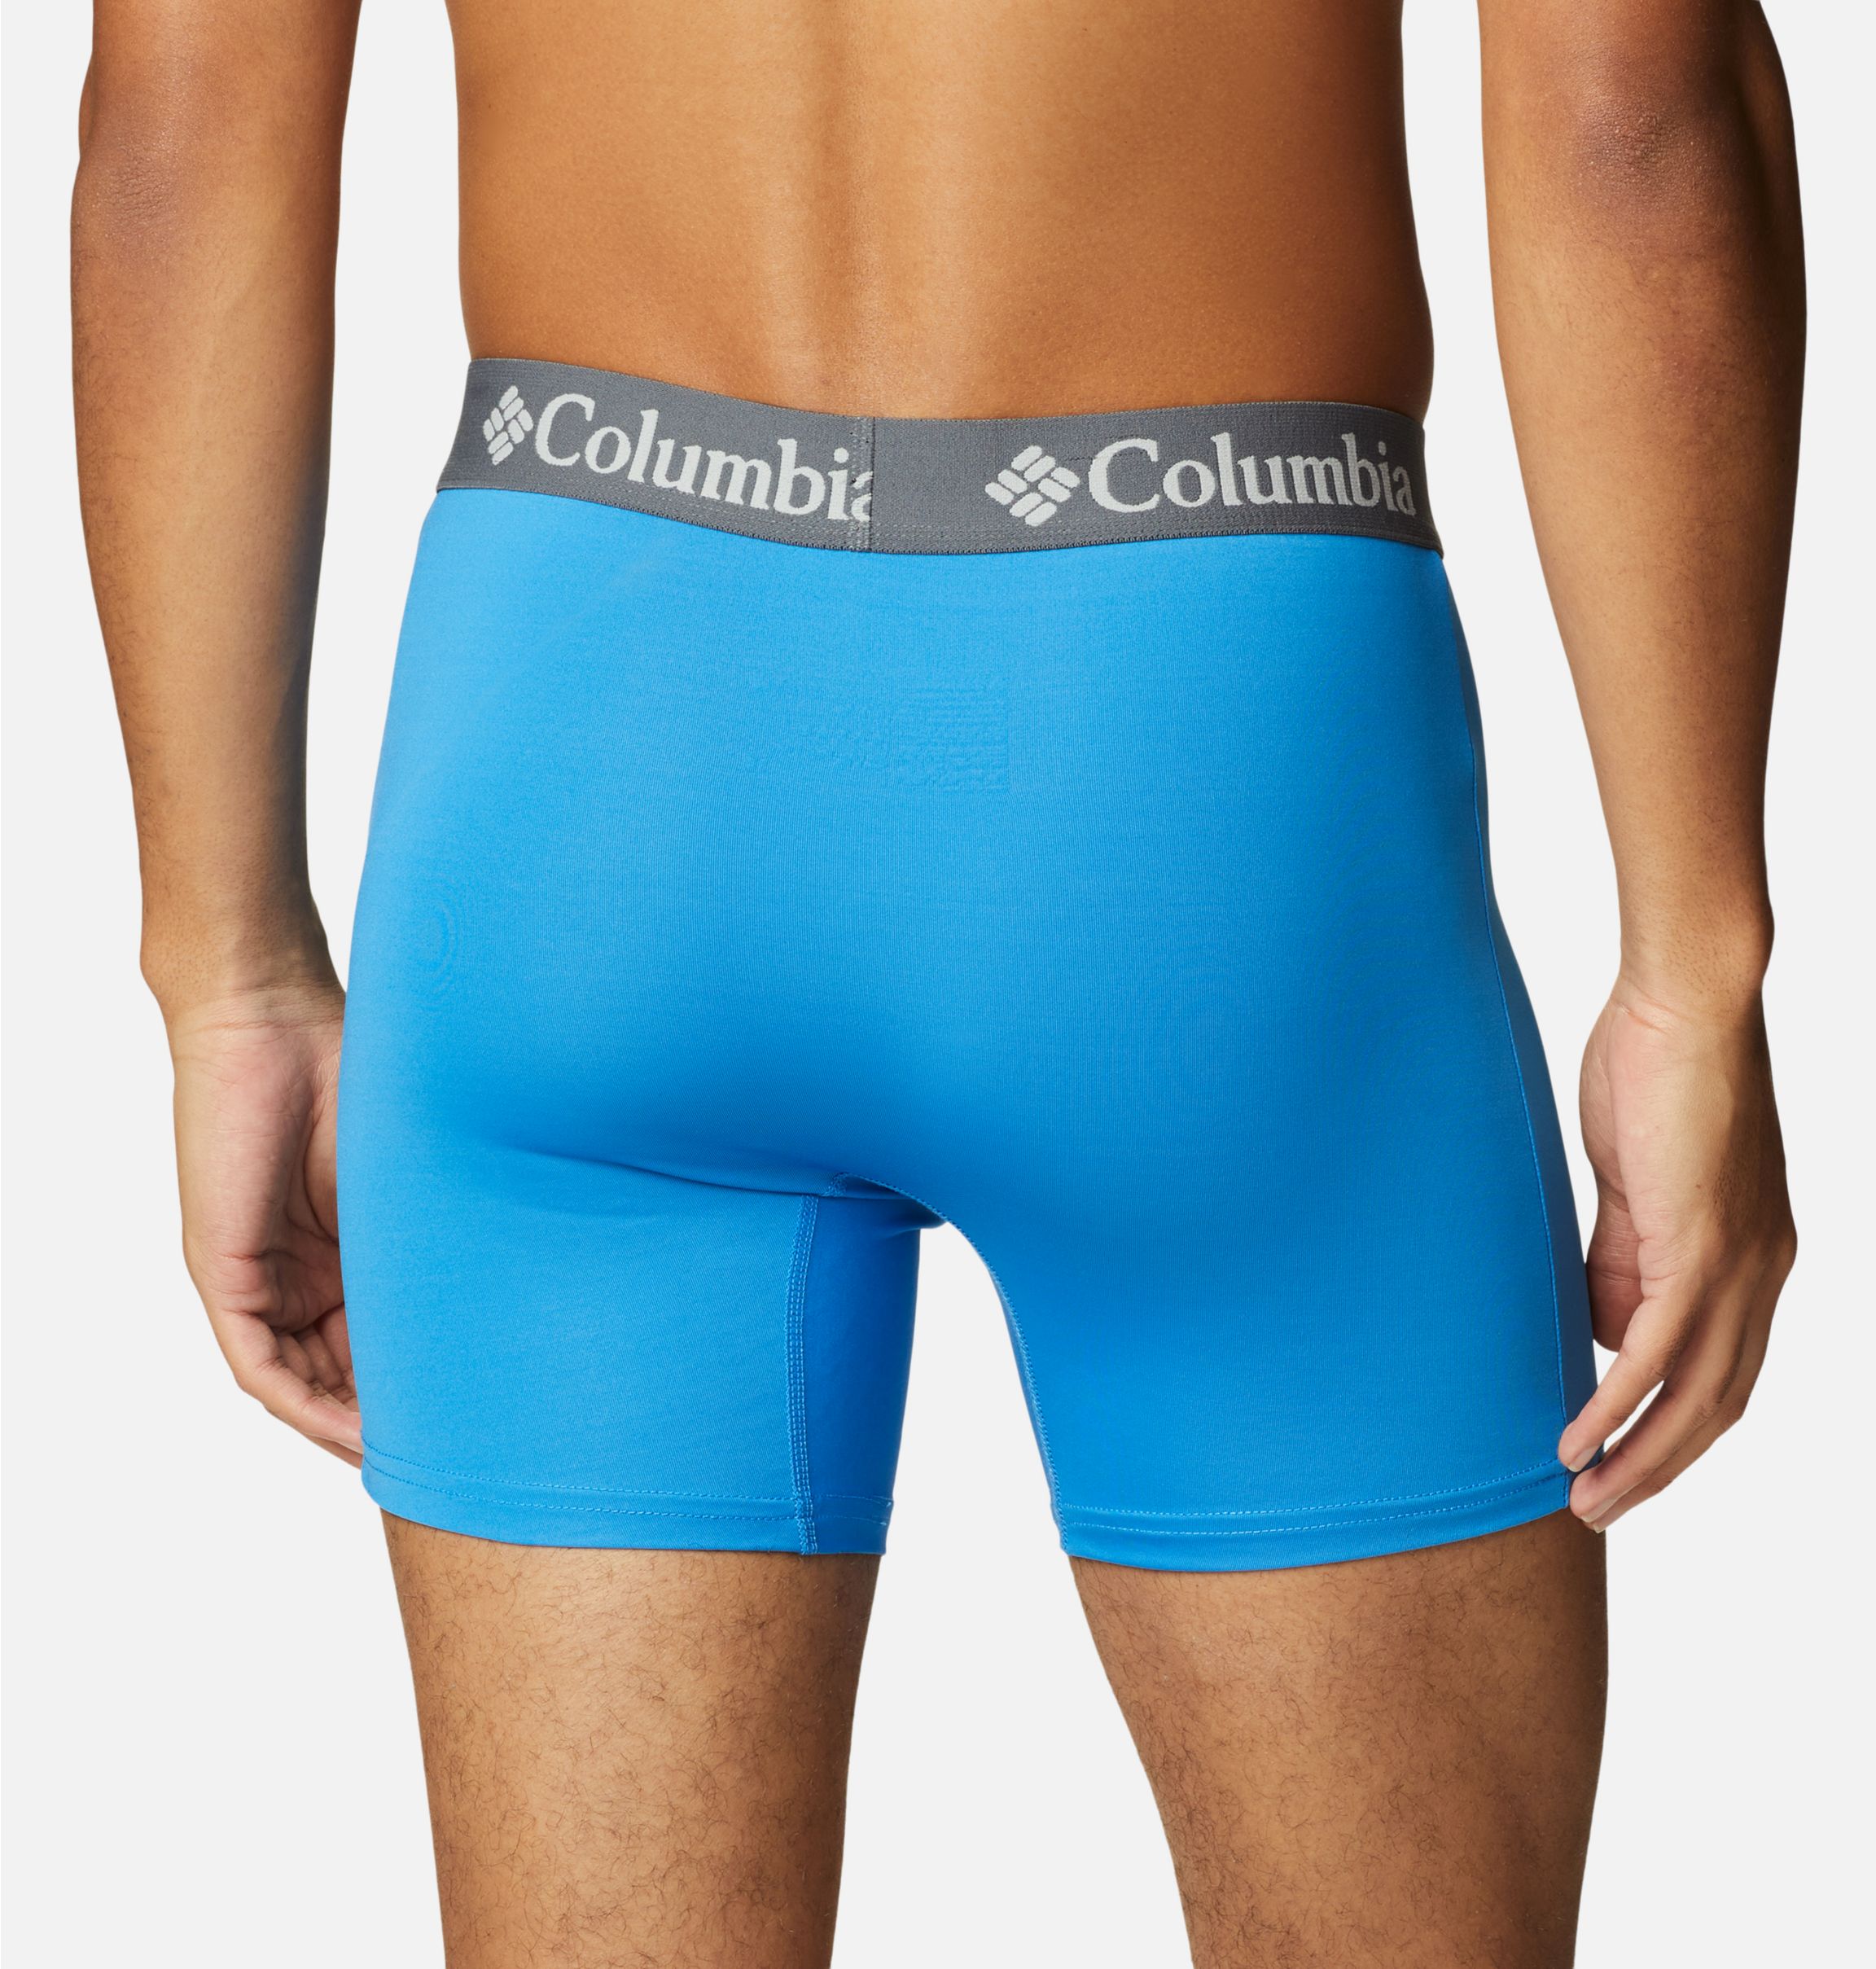 Columbia Men's Performance Cotton Stretch Boxer Brief-3 Pack Large Blue 